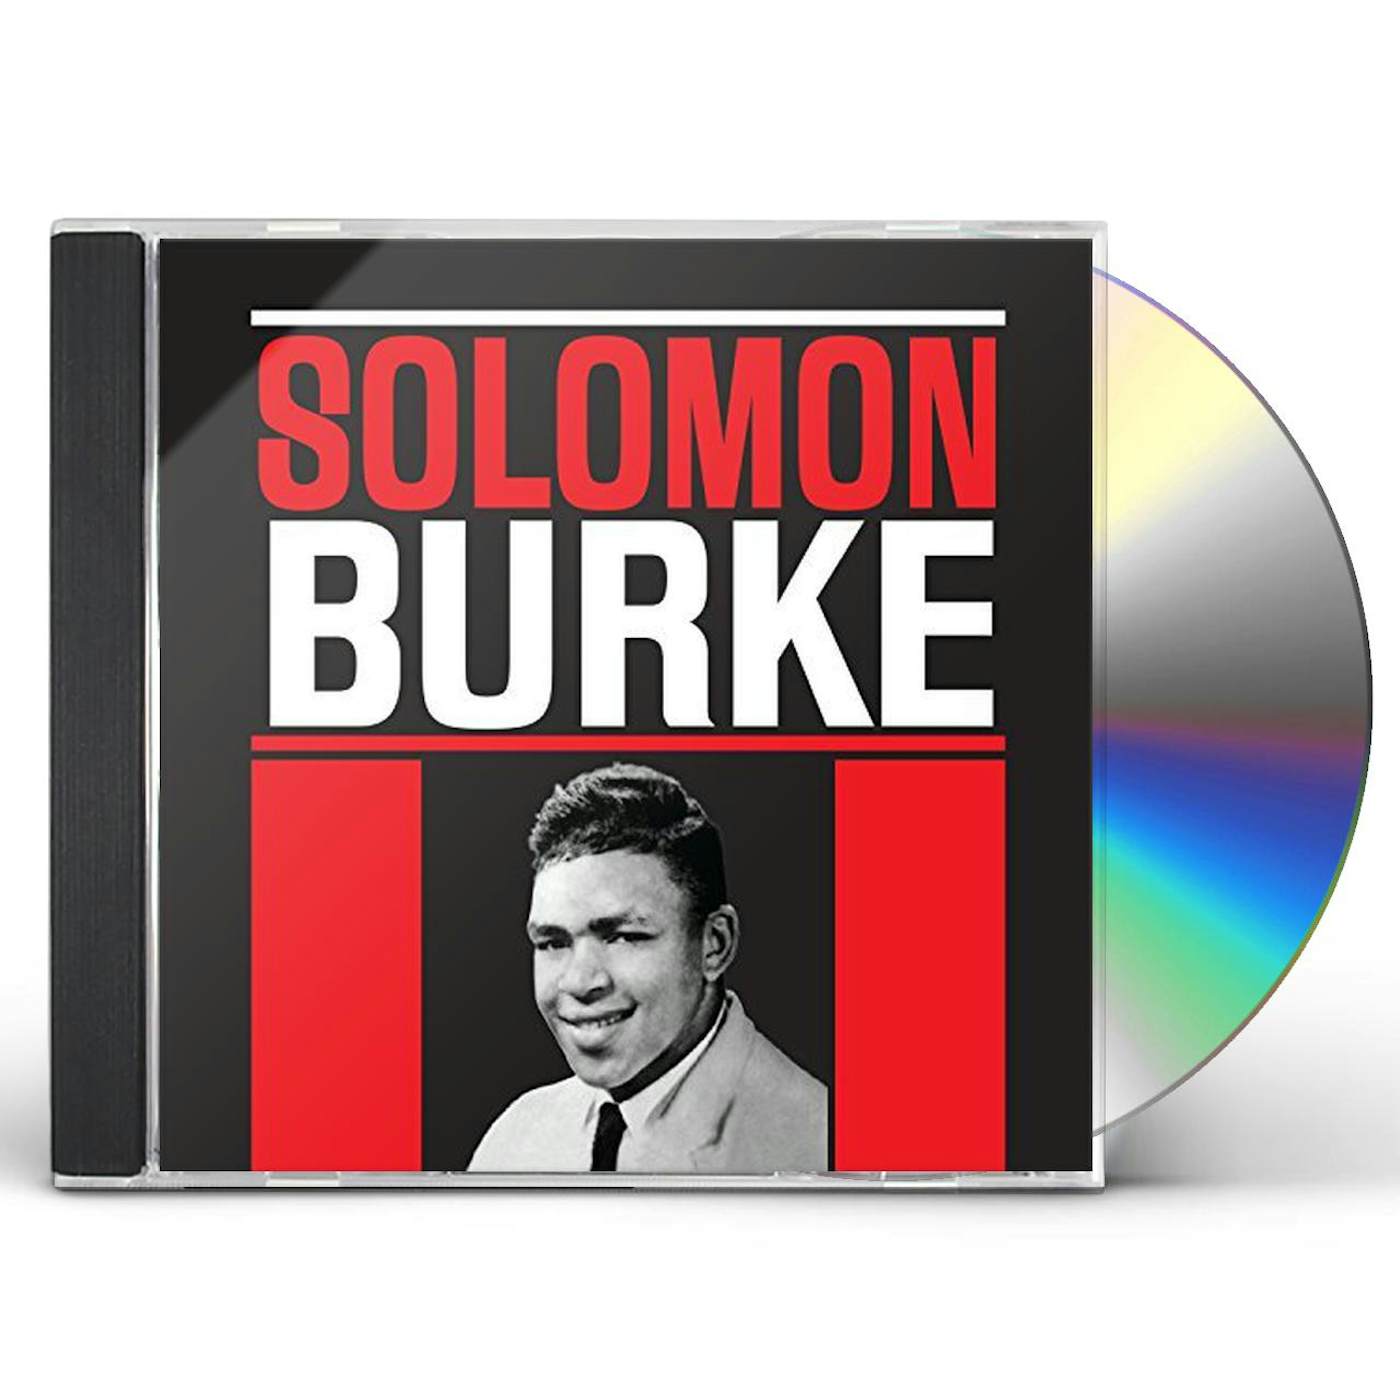 SOLOMON BURKE CD